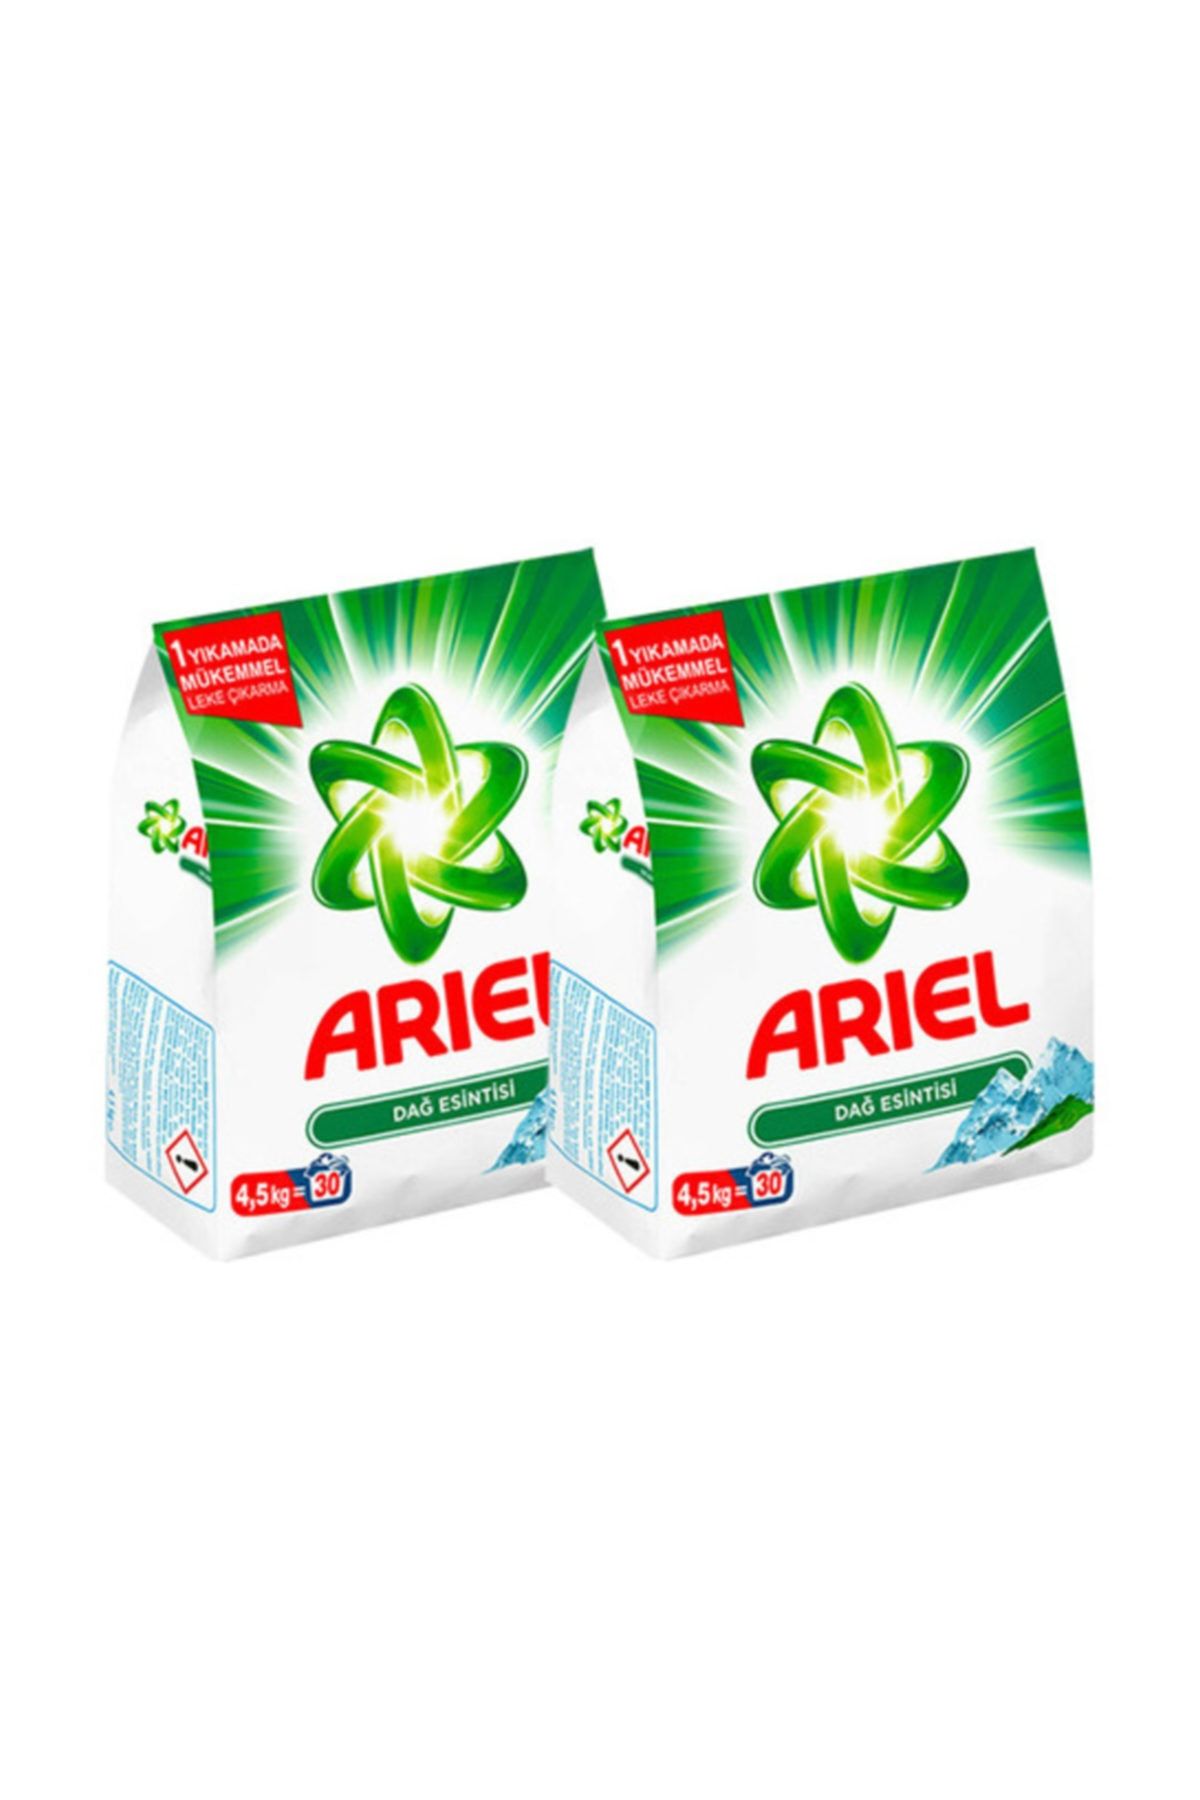 Ariel Toz Çamaşır Deterjanı Dağ Esintisi 4,5 Kg + Dağ Esintisi 4,5 Kg